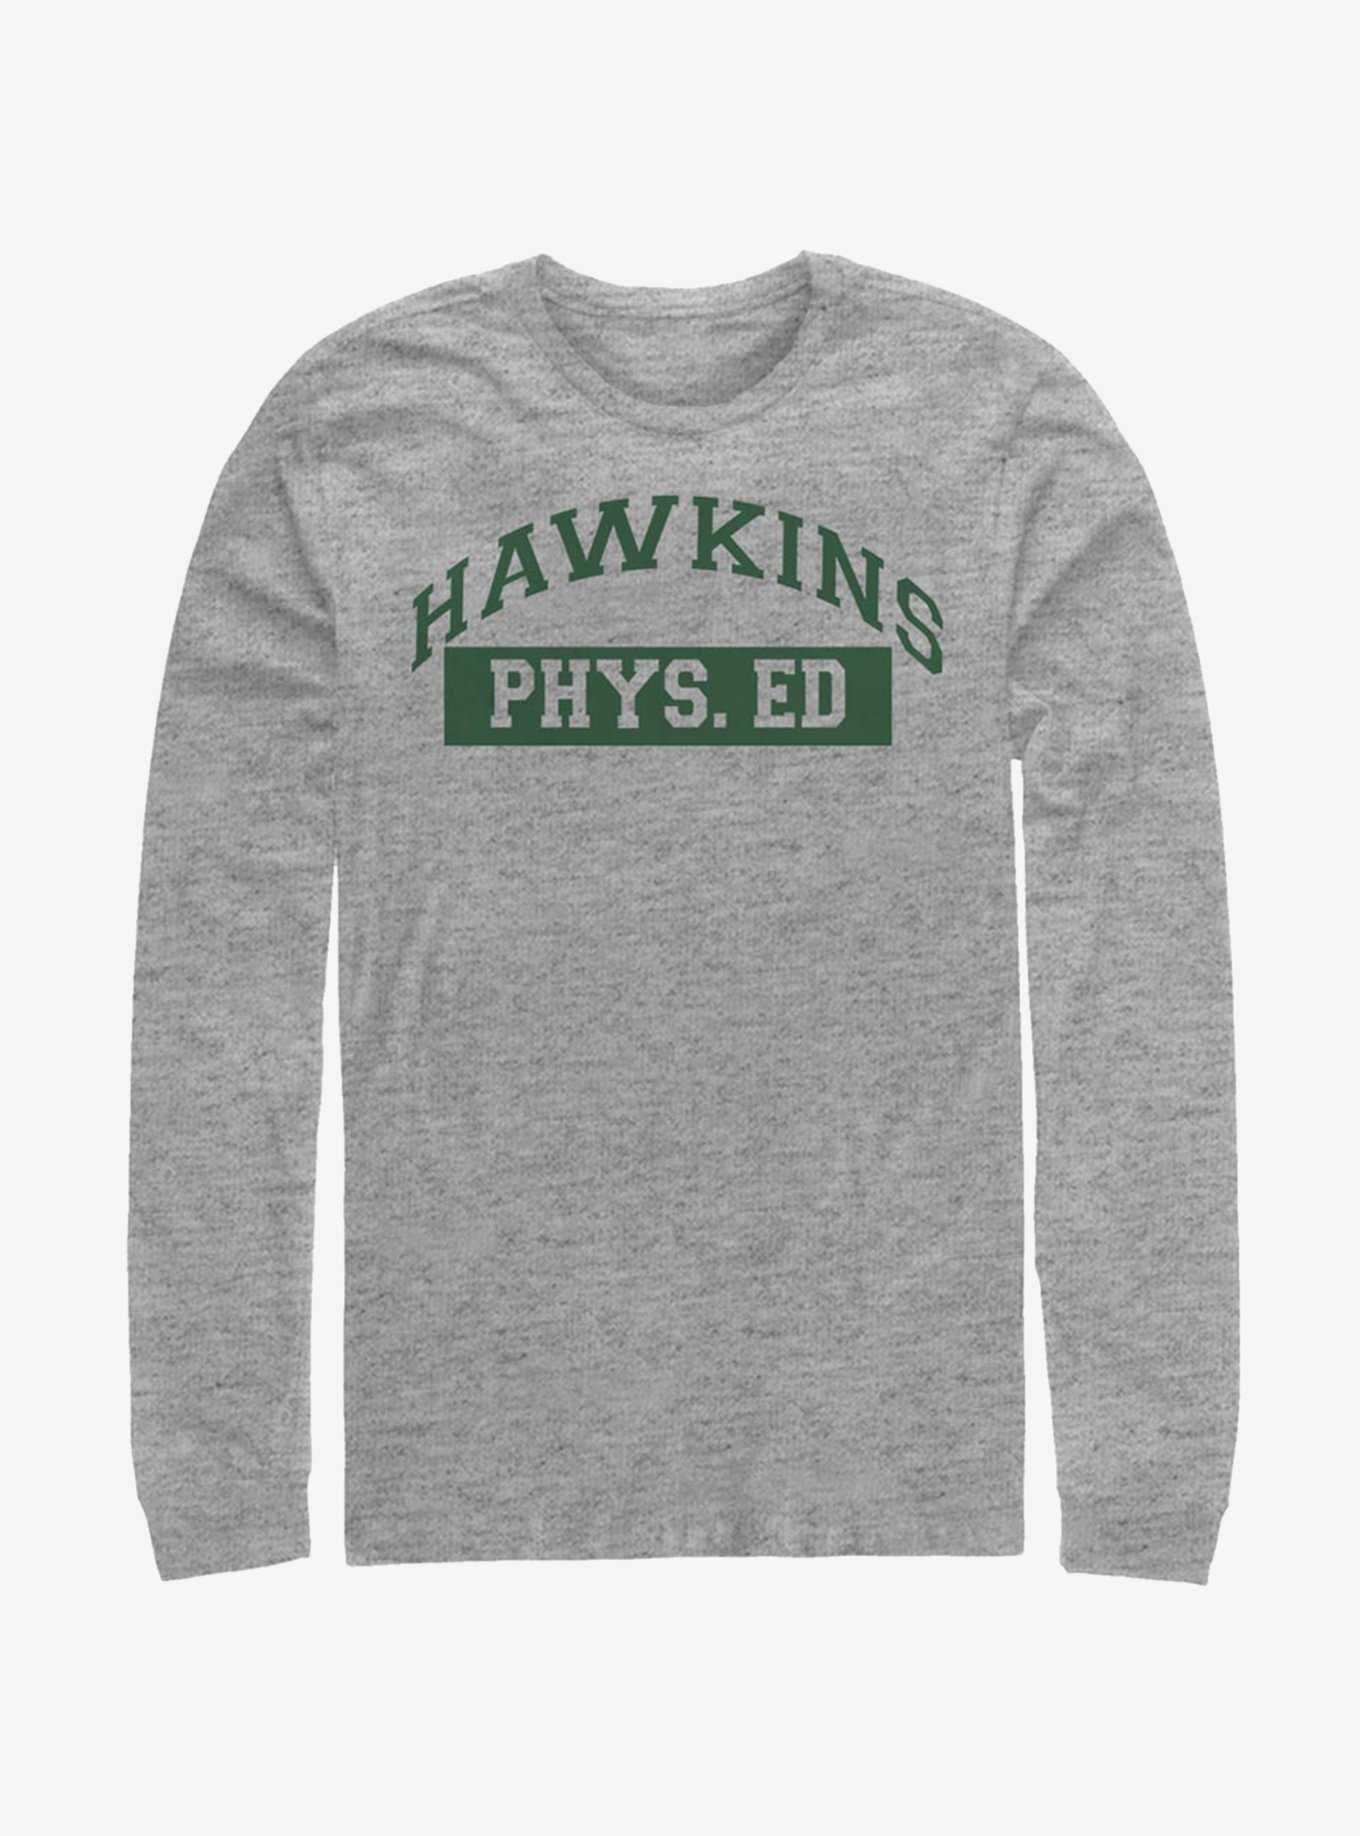 Stranger Things Hawkins Phys. Ed Long-Sleeve T-Shirt, , hi-res